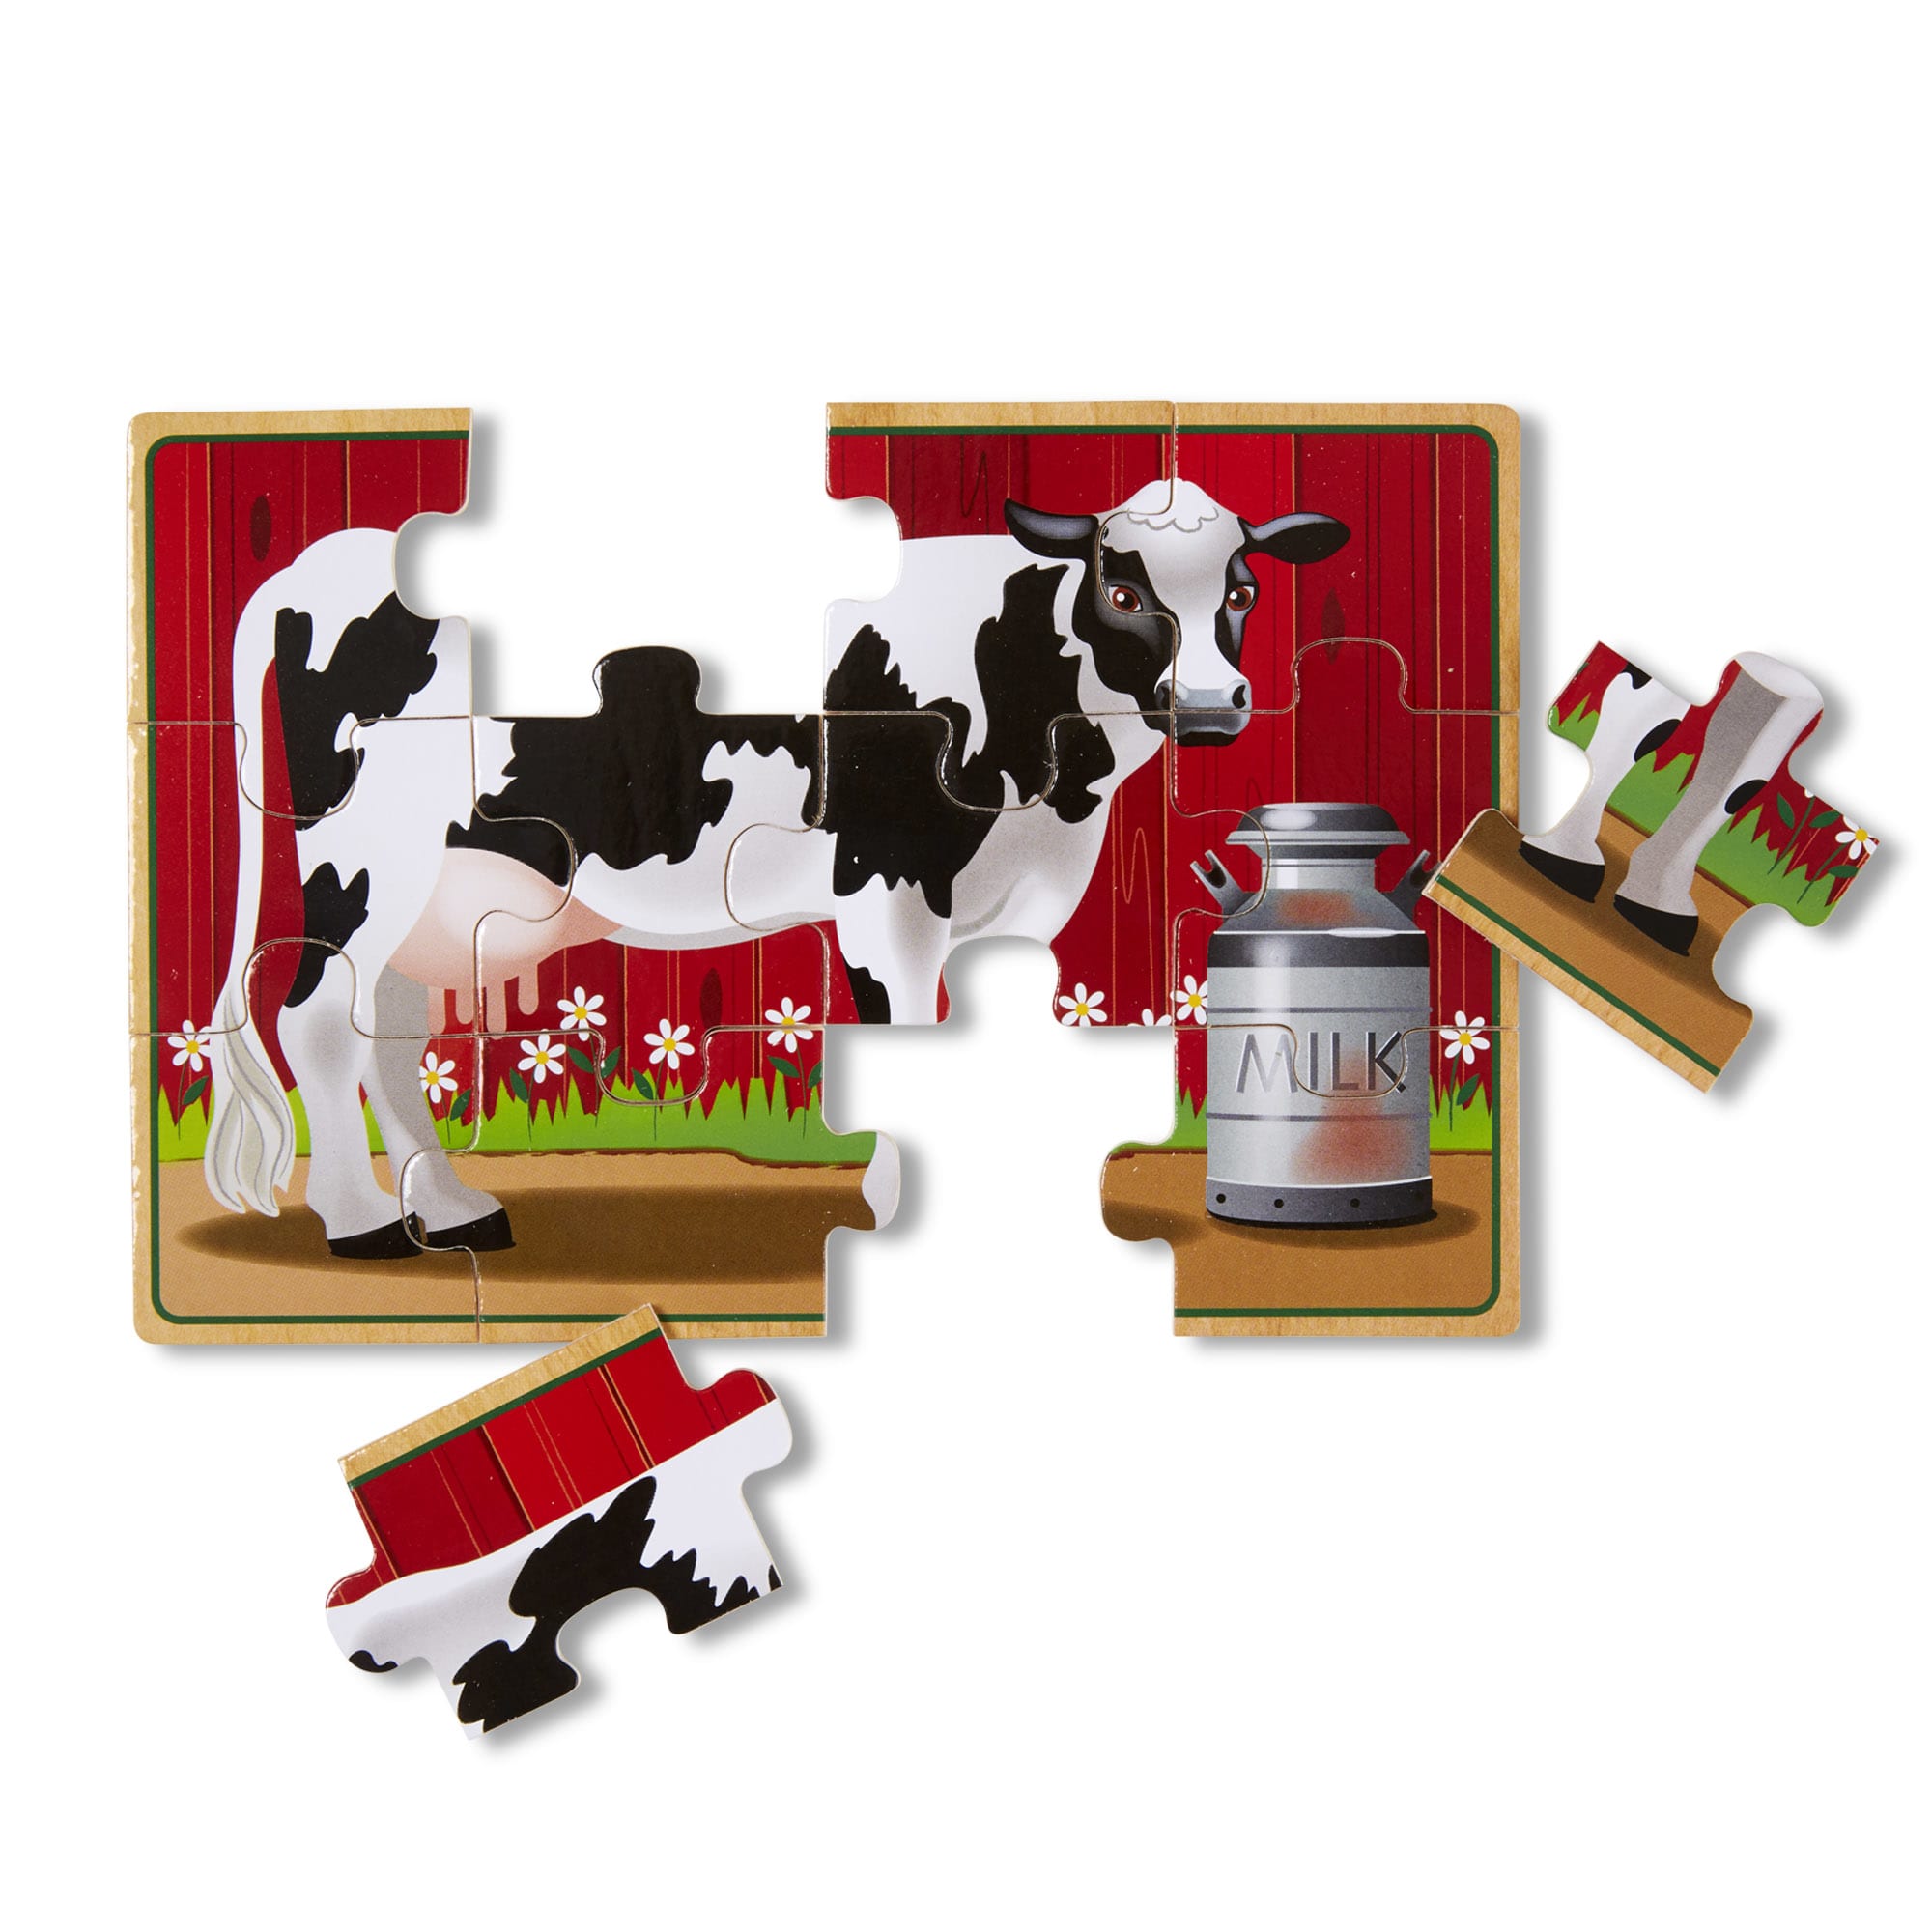 Melissa & Doug Farm Animal Jigsaw puzzle - 3793